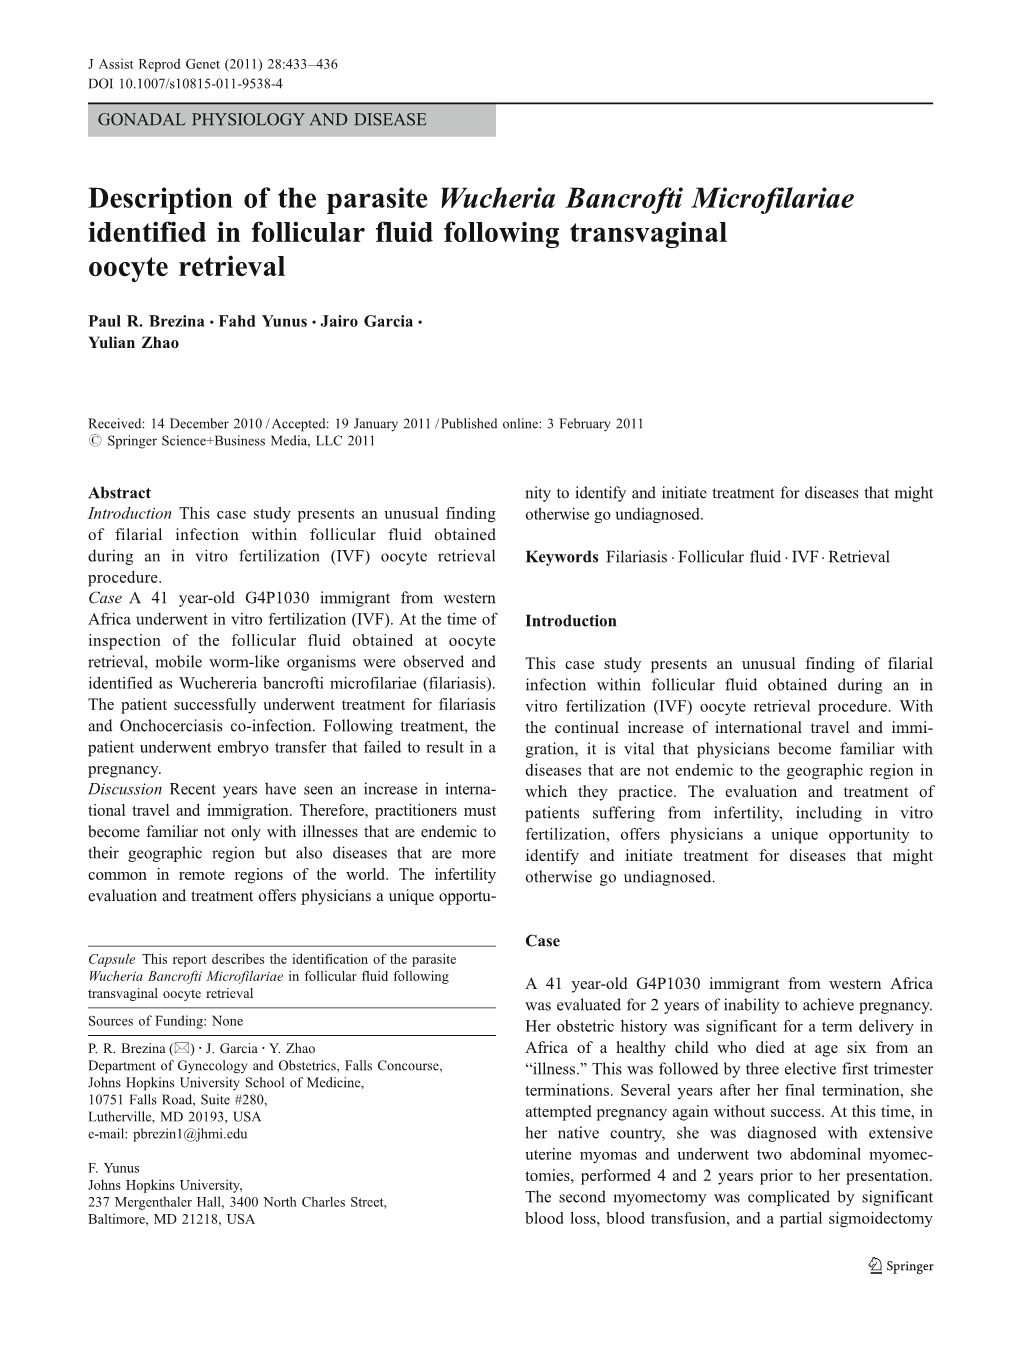 Description of the Parasite Wucheria Bancrofti Microfilariae Identified in Follicular Fluid Following Transvaginal Oocyte Retrieval